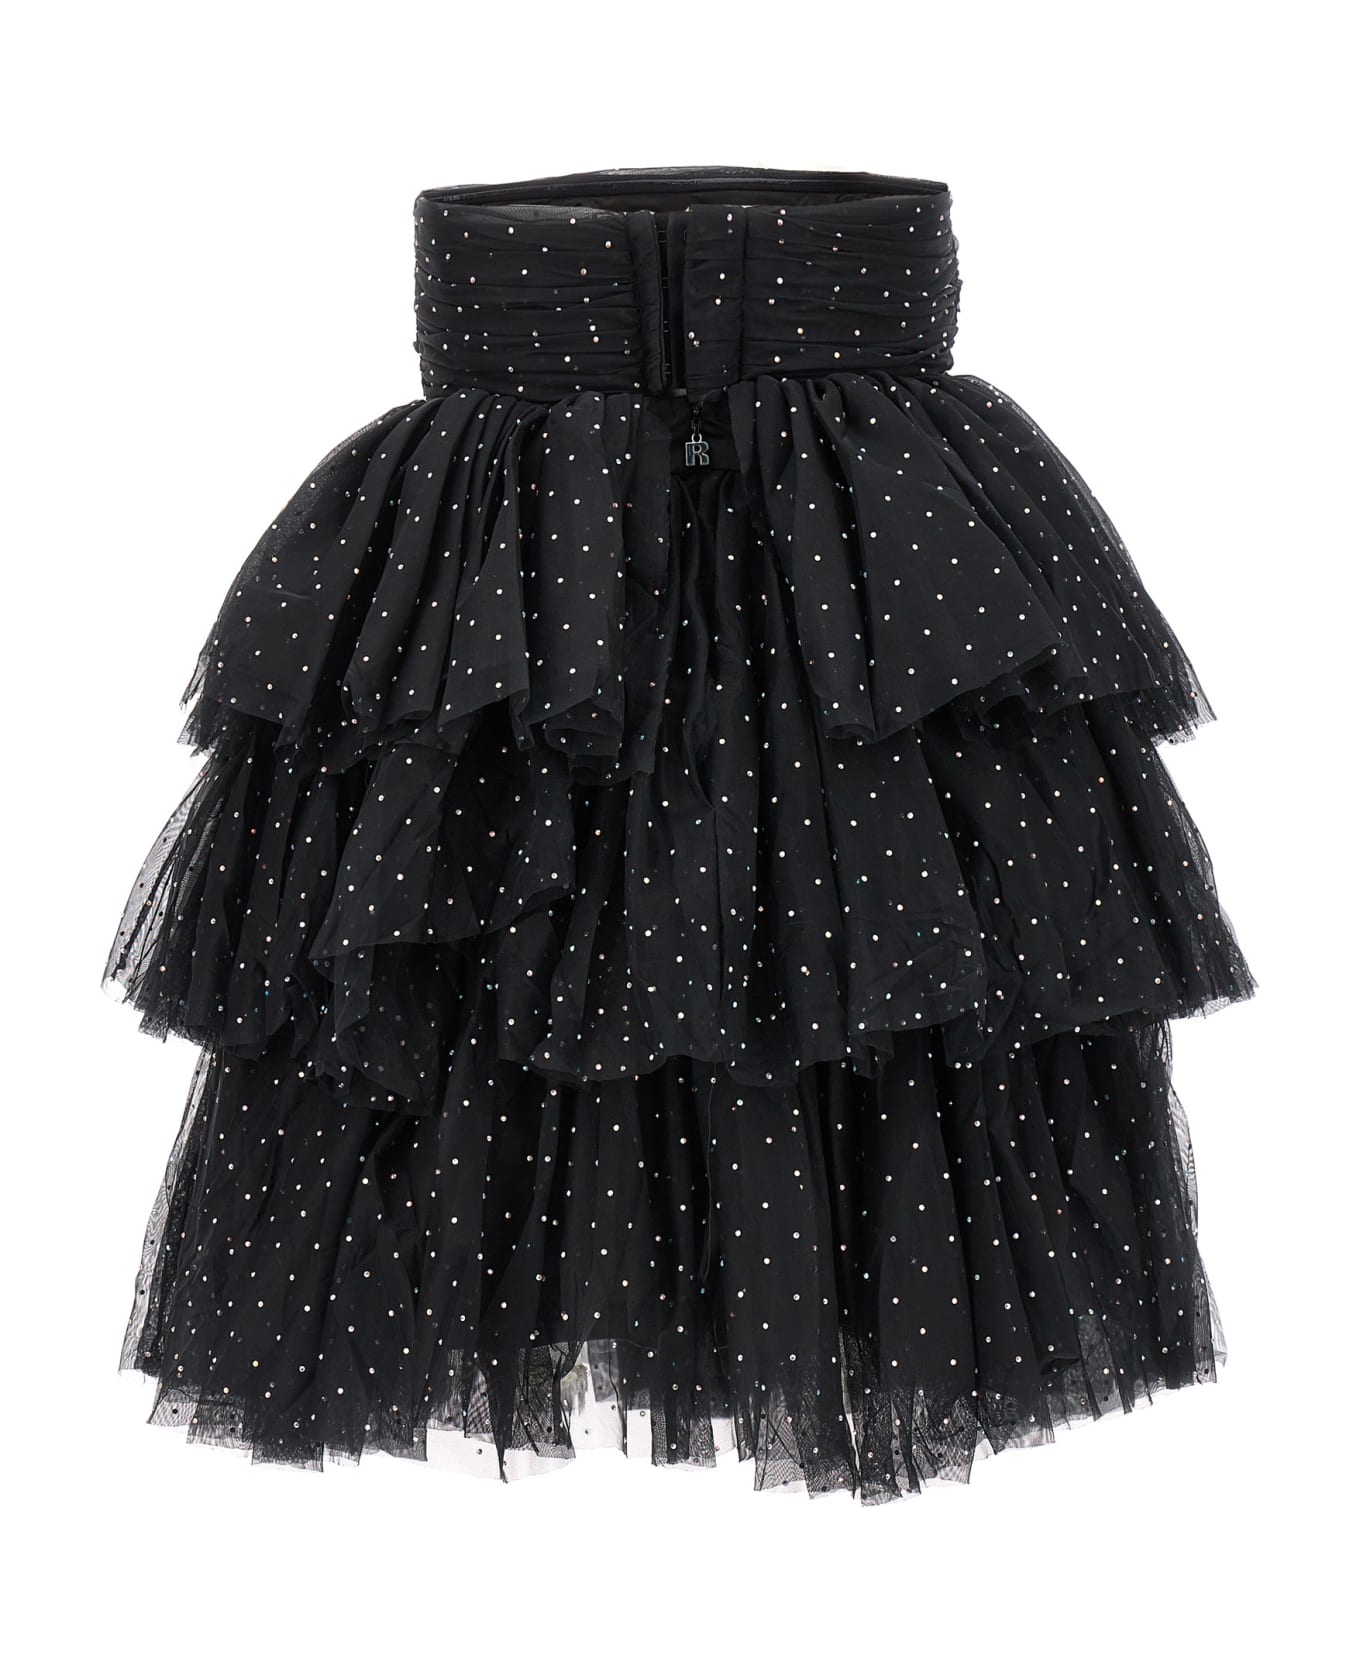 Rotate by Birger Christensen 'mesh Mini Ruffle' Dress - Black  